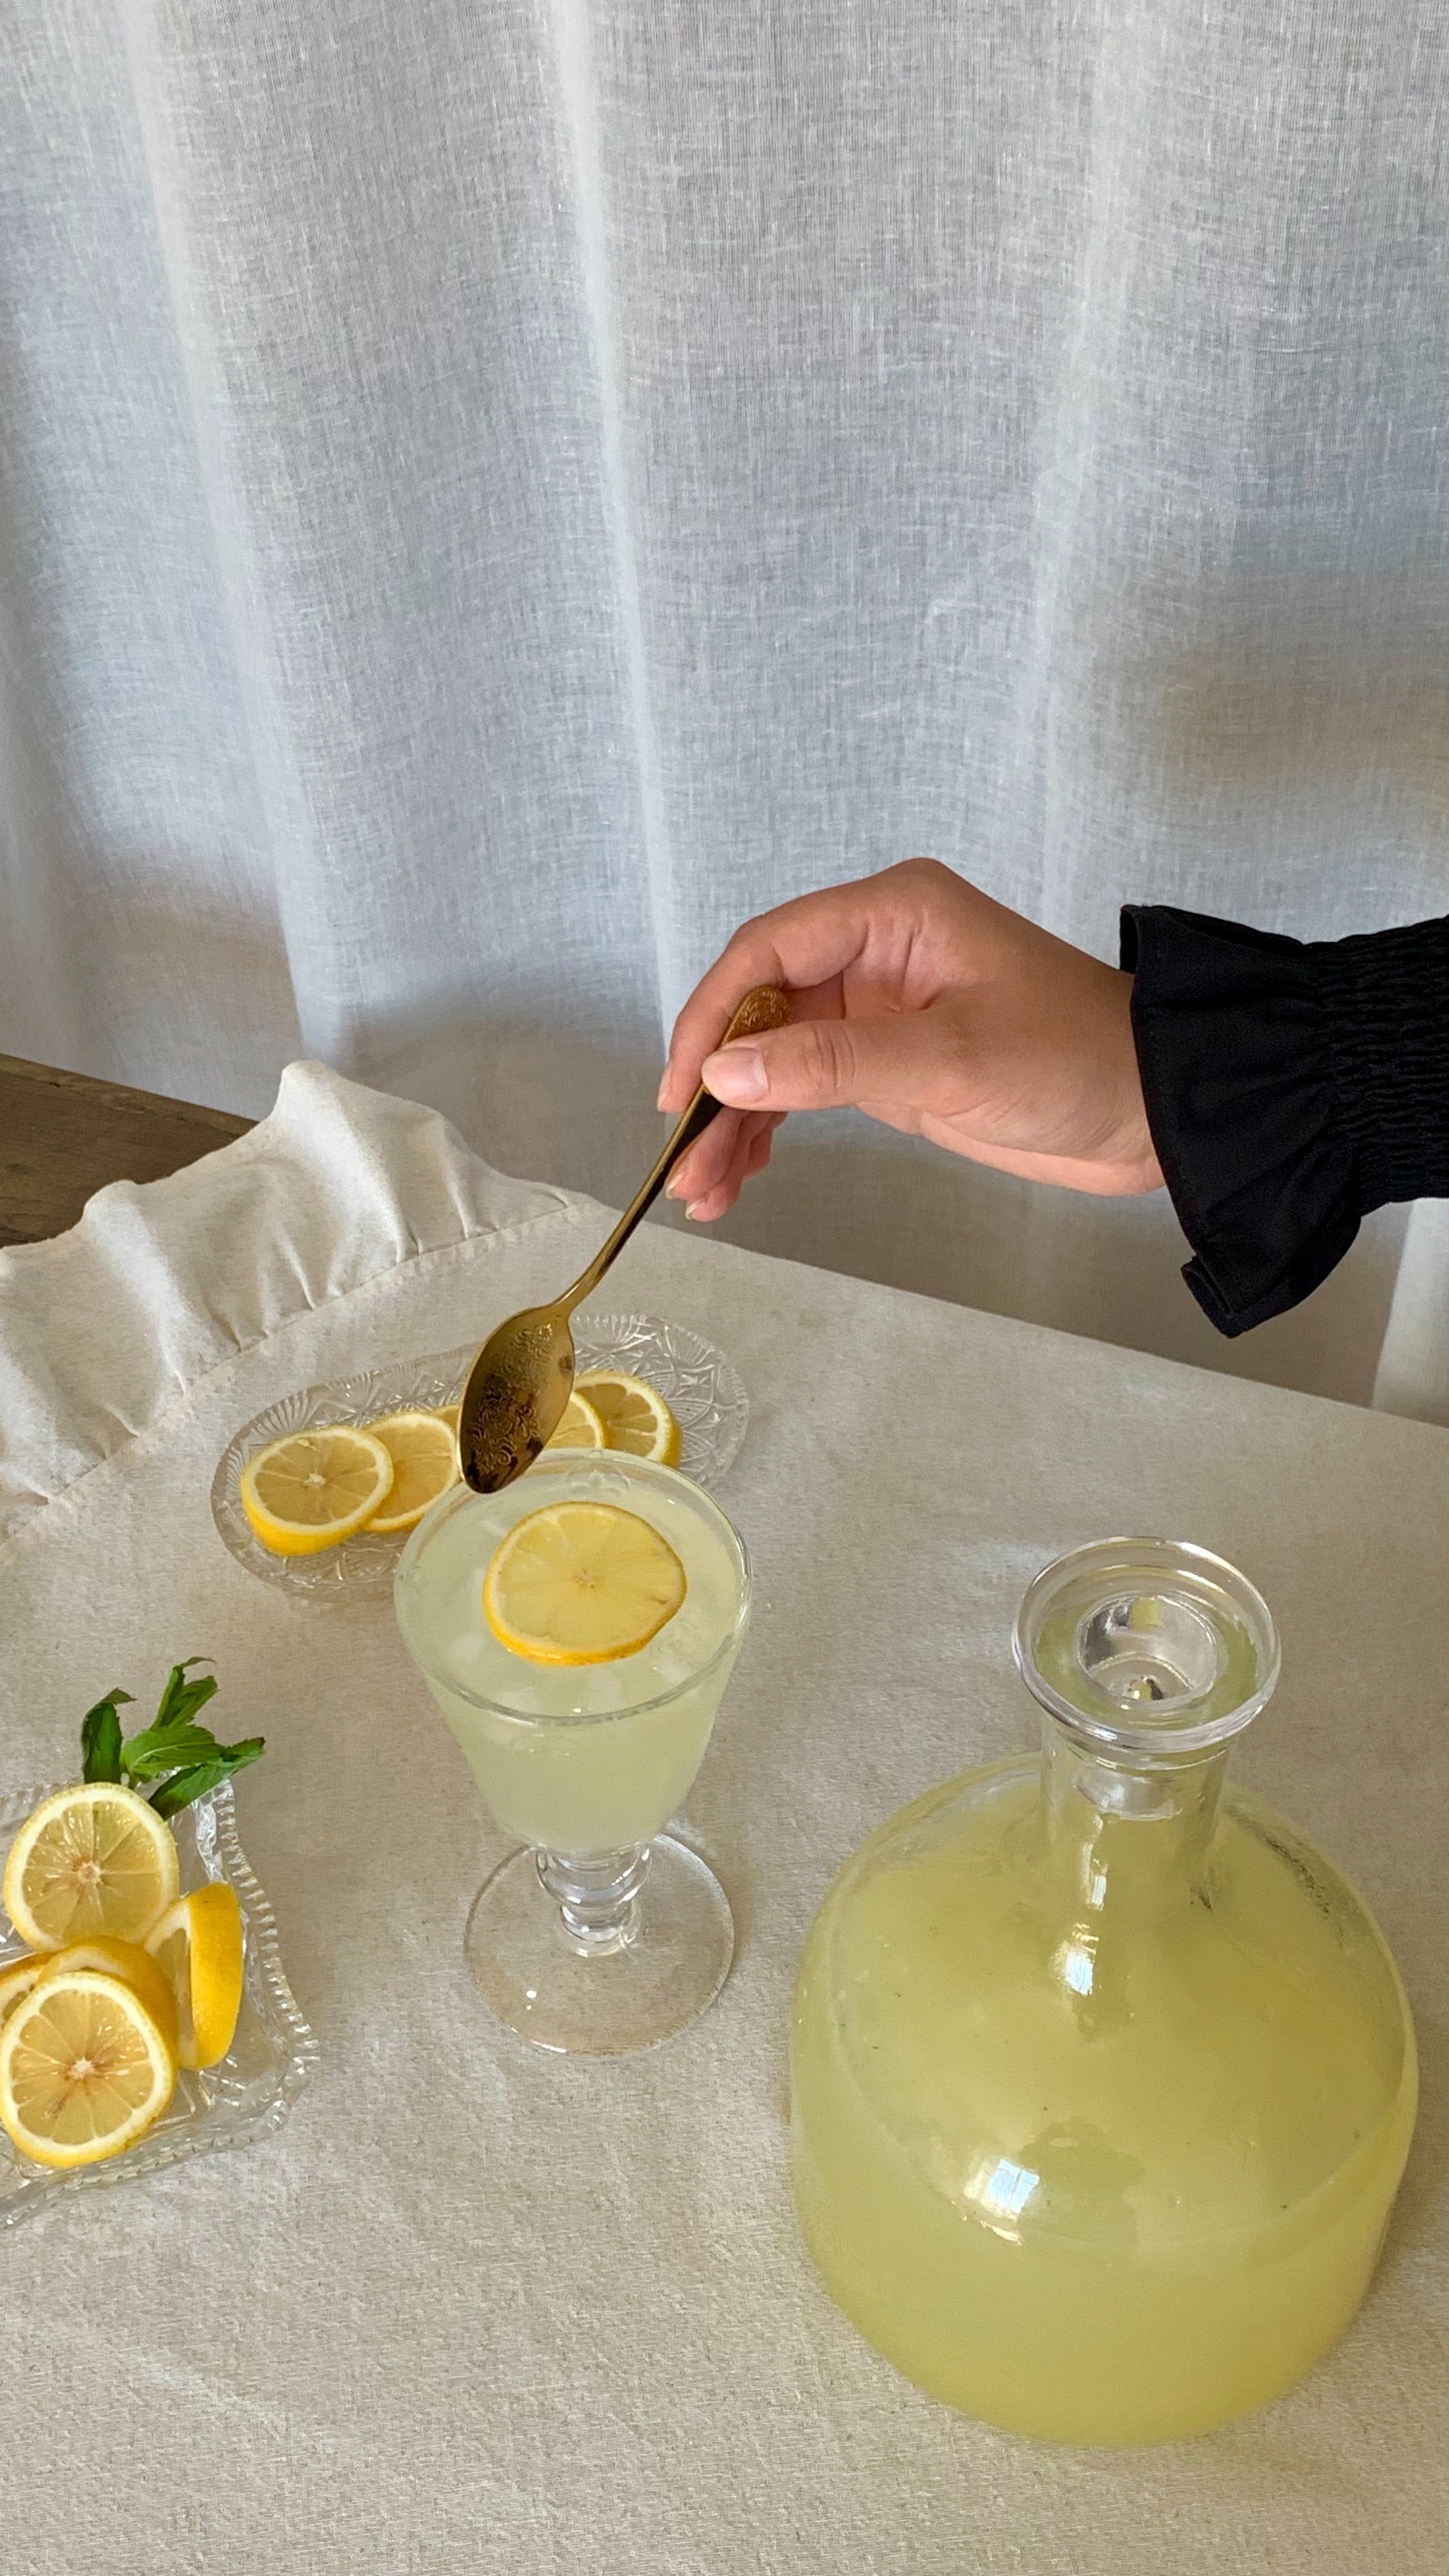 A jar and a glass of lemonade. | Source: Pexels